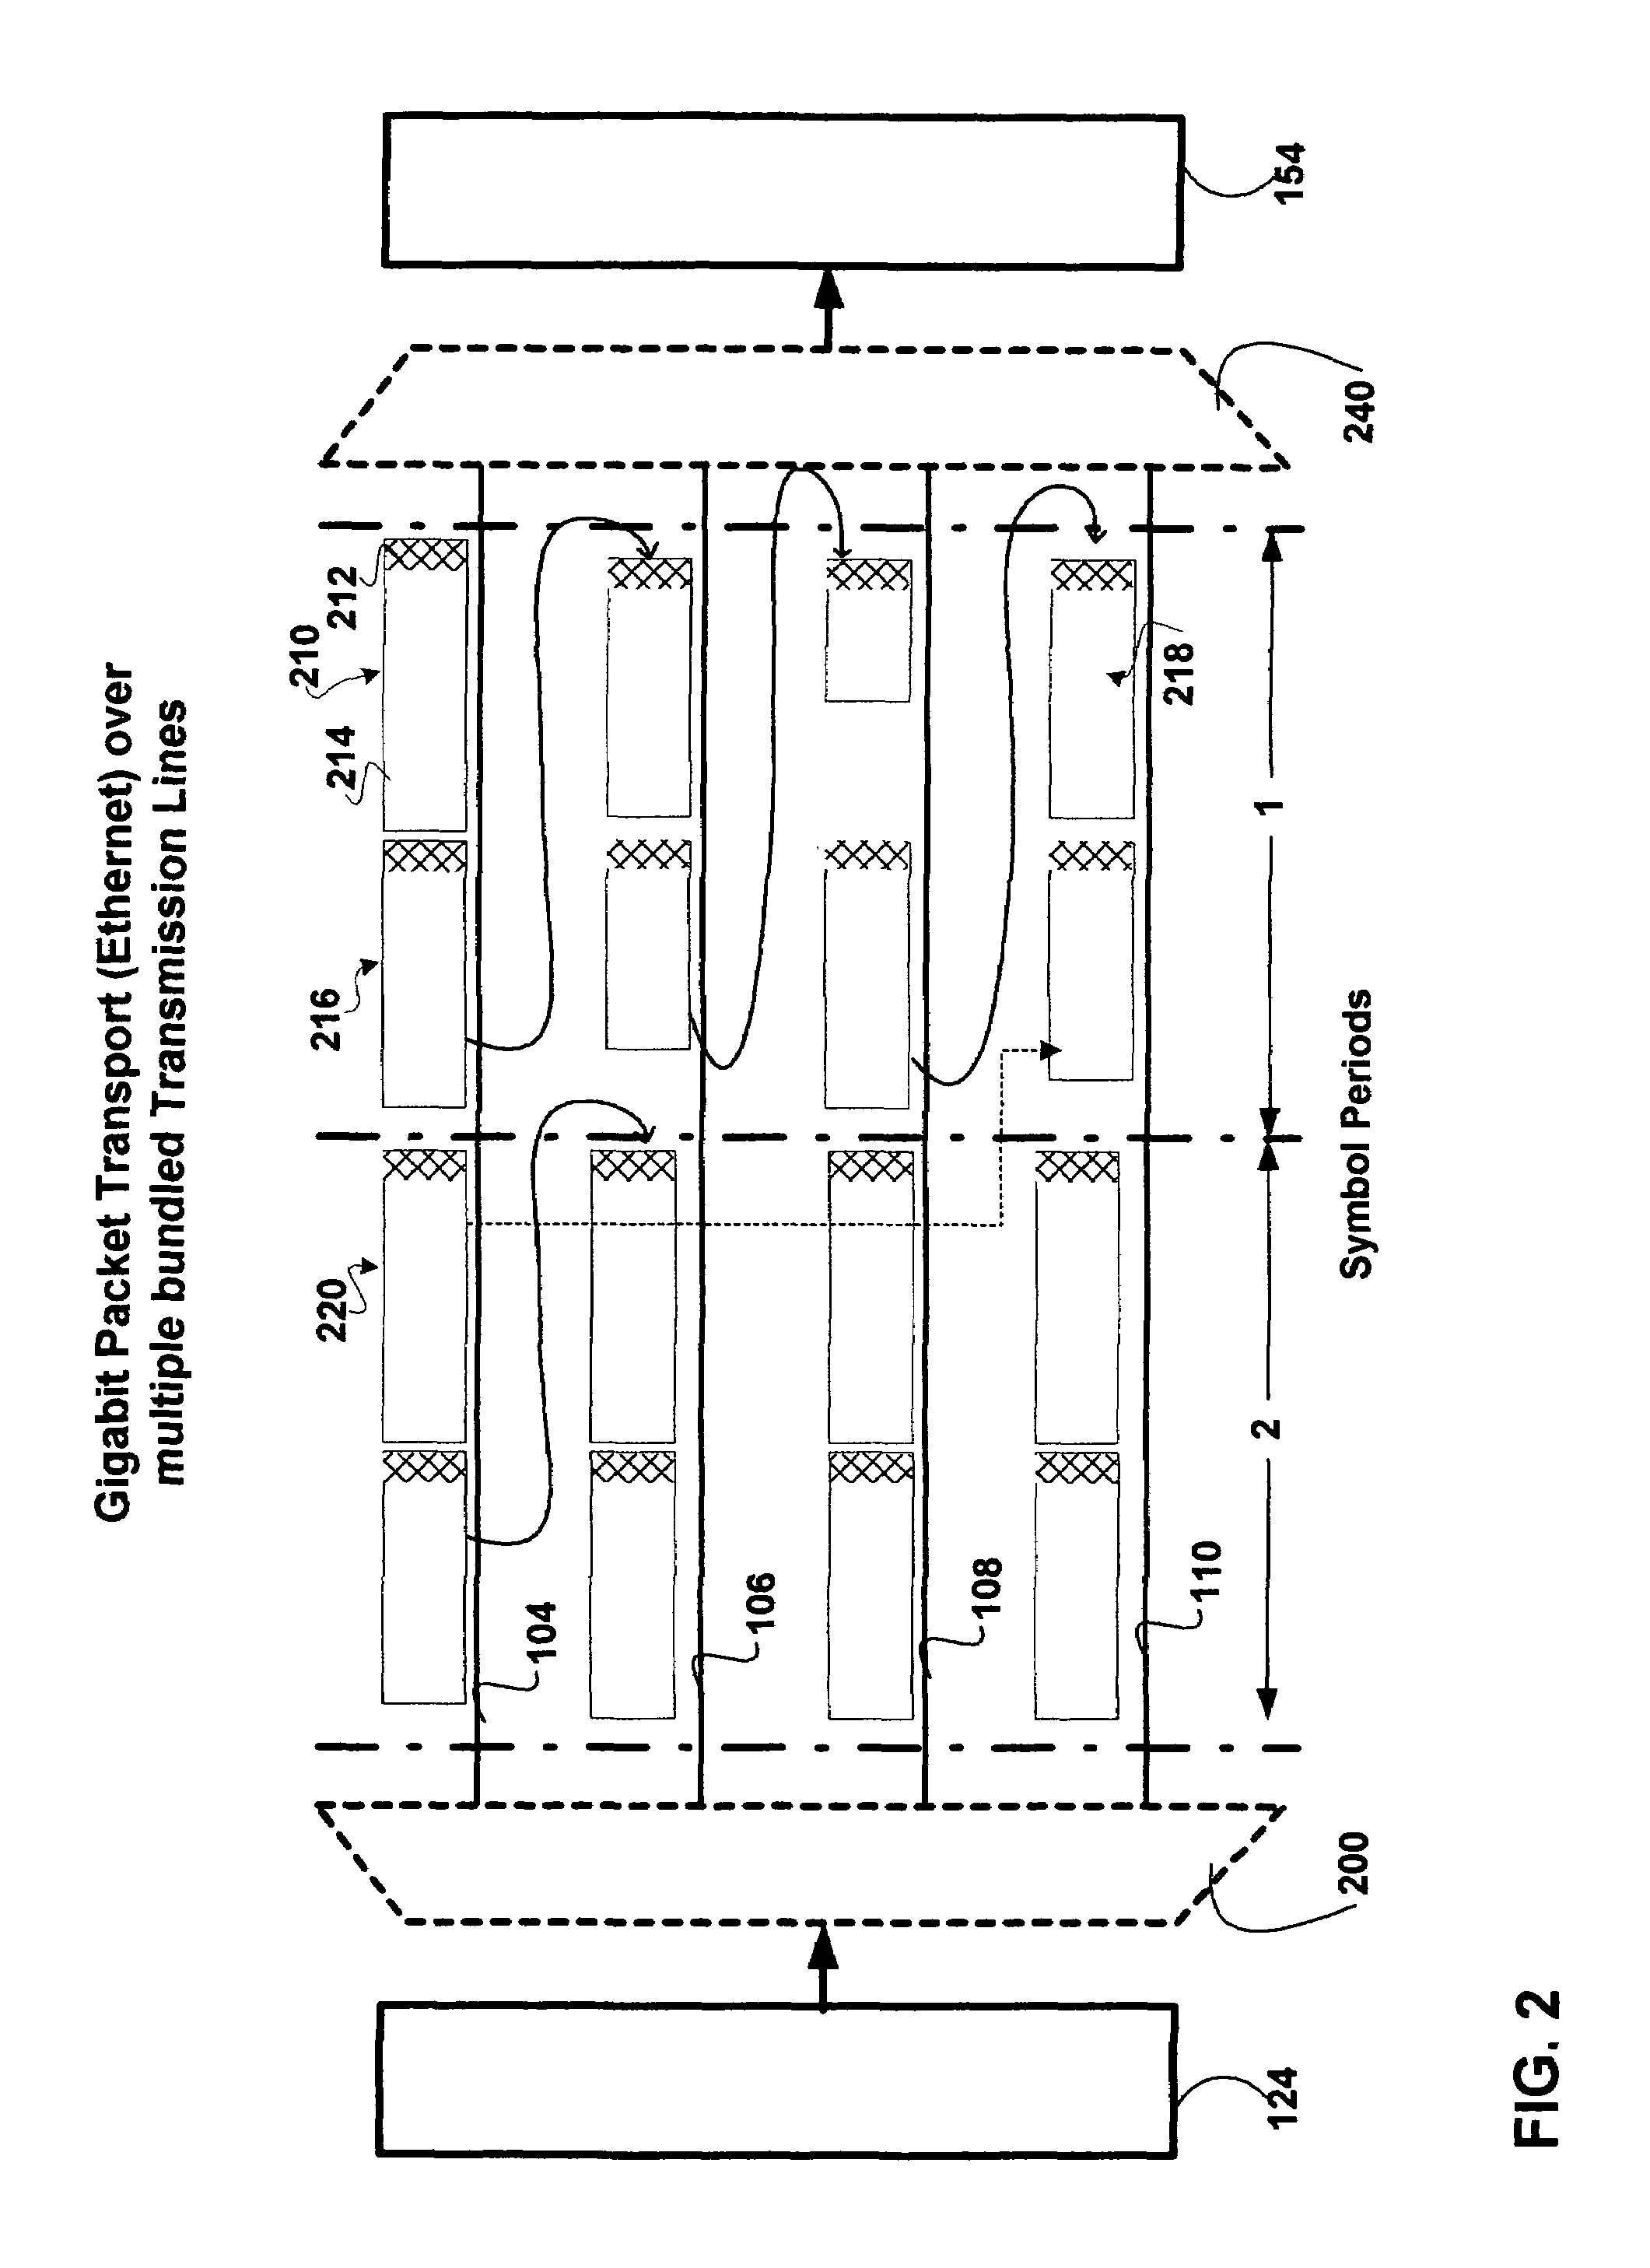 Method and apparatus for error correction in multi-line multi-tone gigabit transmission systems